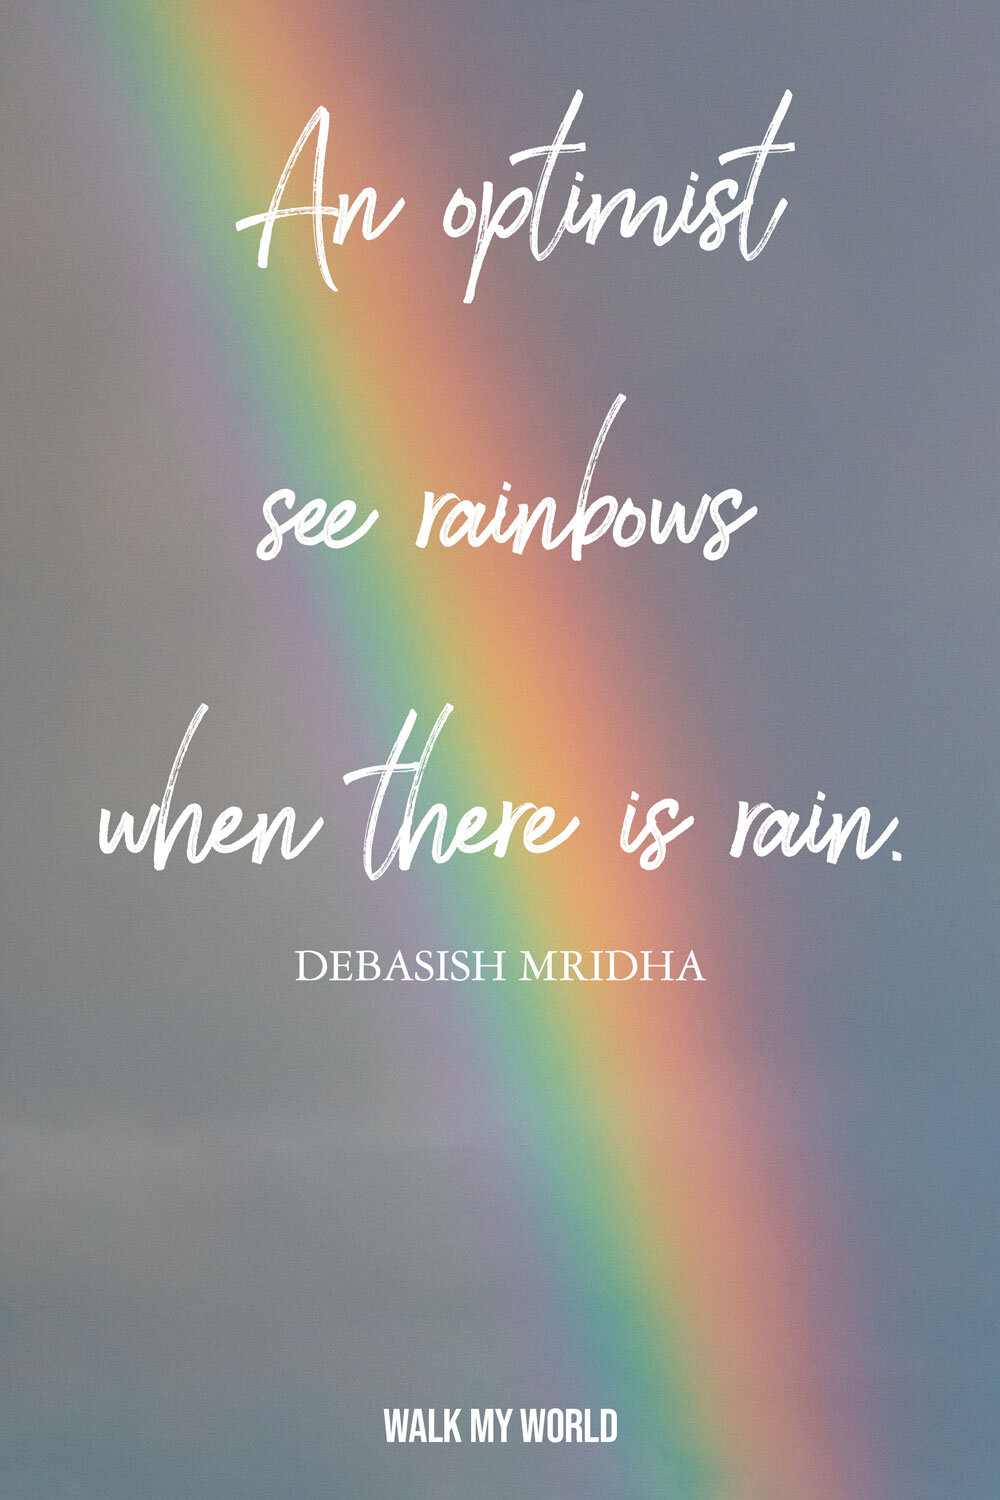 Rainbows and encouragement!